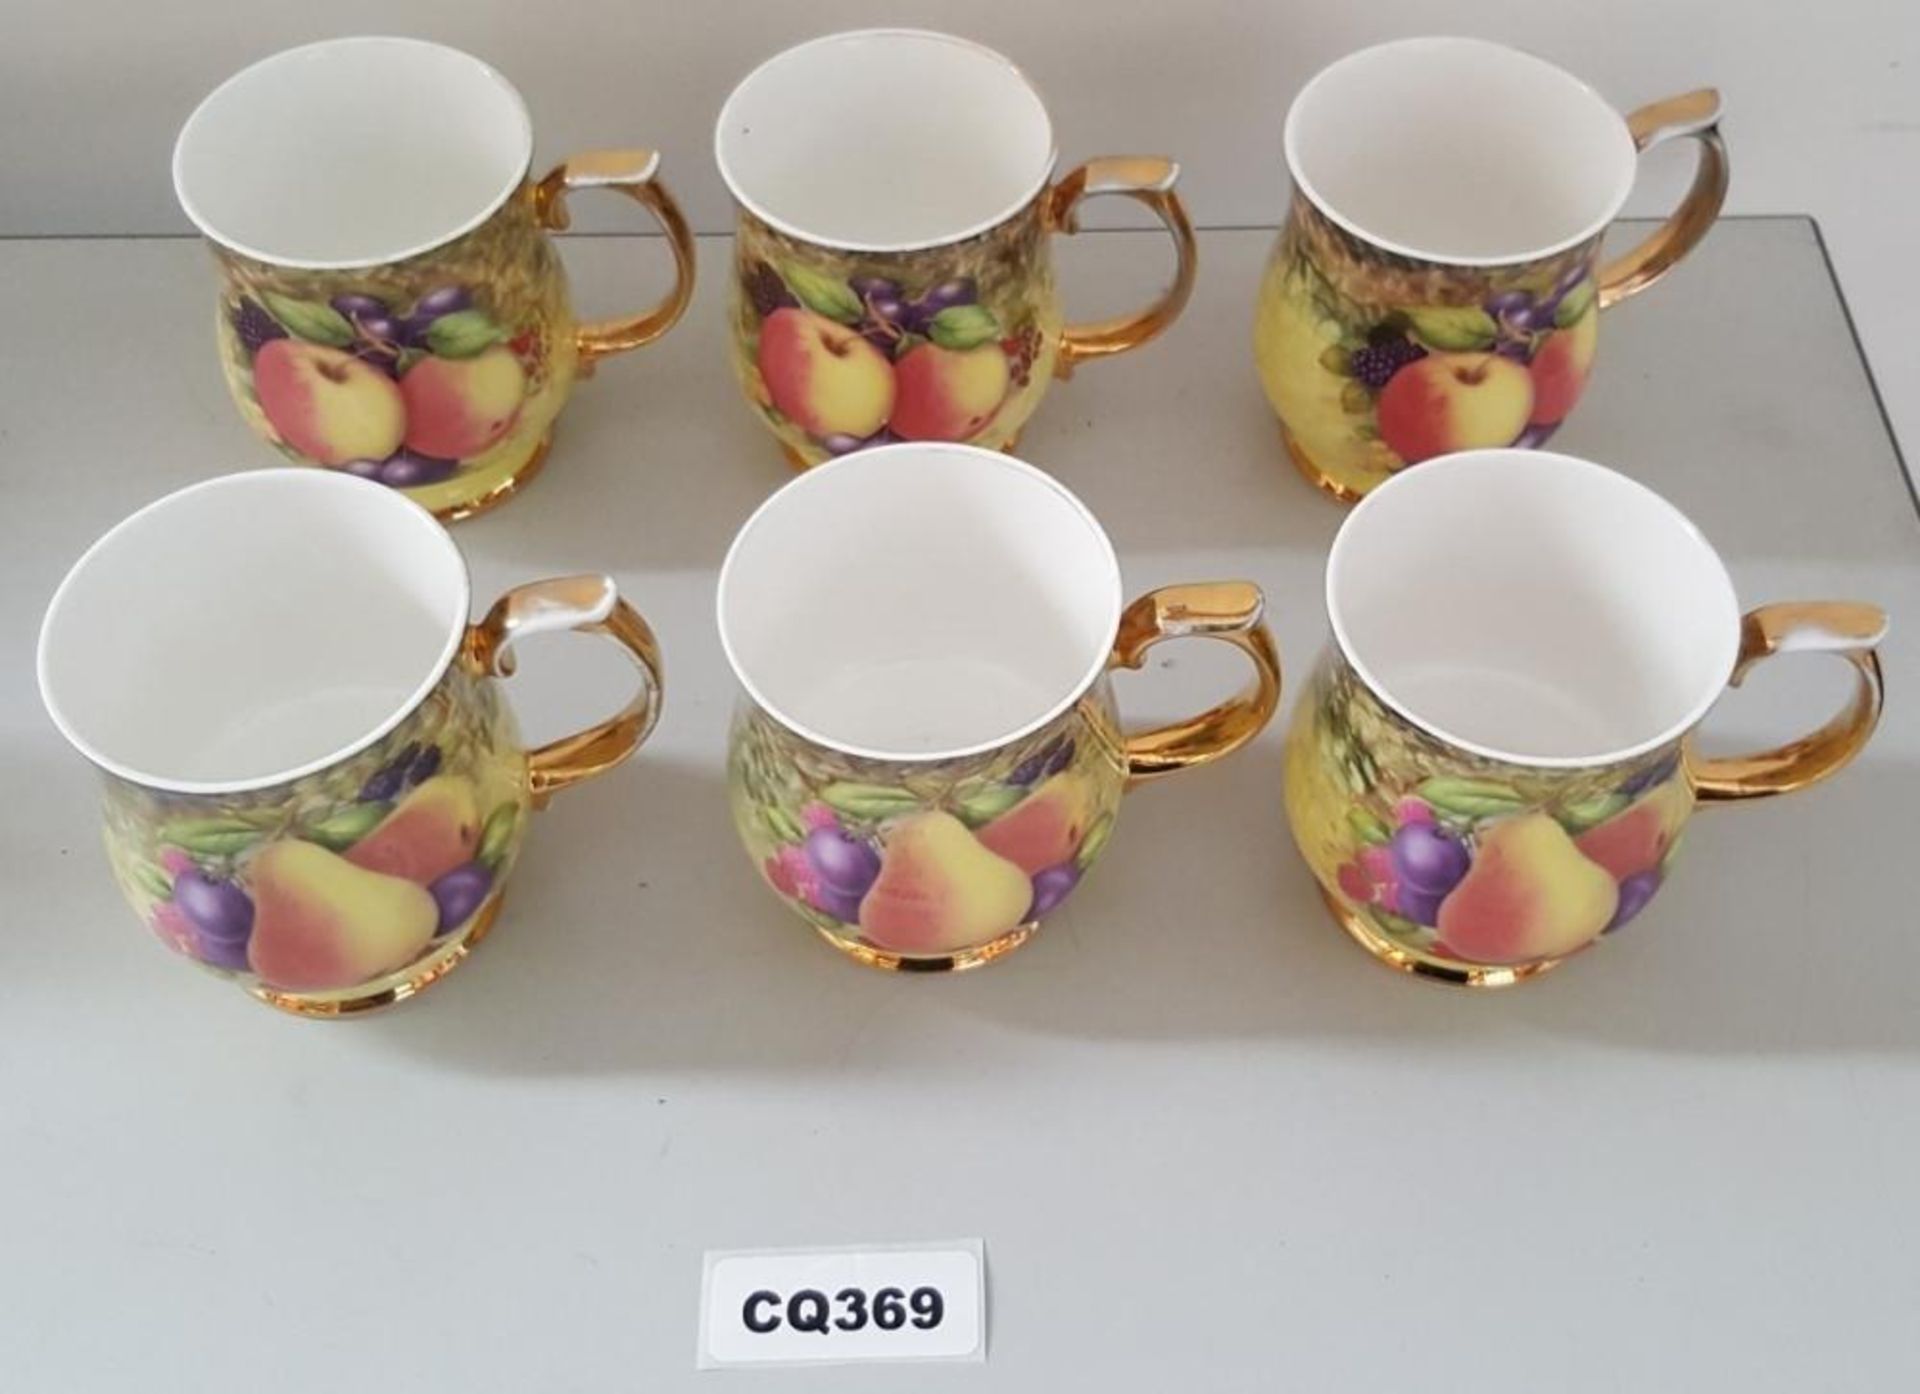 6 x Set Of Baron China Staffs LTD Mugs With Fruit Design - Ref CQ369 E - CL334 - Location: Altrincha - Image 5 of 5